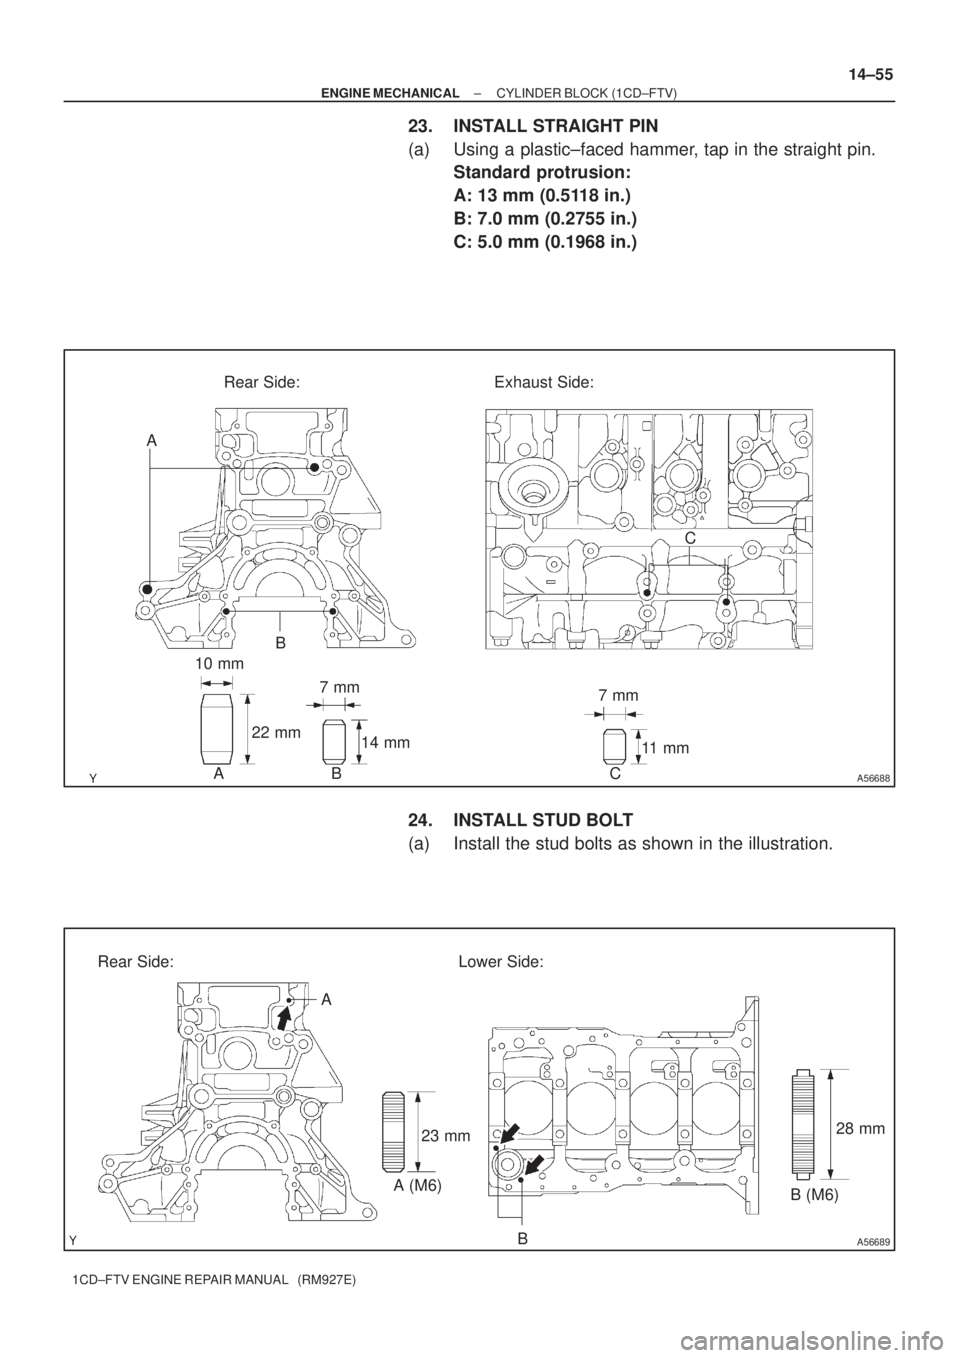 TOYOTA AVENSIS 2005  Service Repair Manual A56688
10 mm
22 mm7 mm
14 mm
11  m m
ABRear Side: Exhaust Side:
7 mm
C
B
A
C
A56689
Rear Side: Lower Side:
A
B
23 mm
A (M6)
B (M6)28 mm
± ENGINE MECHANICALCYLINDER BLOCK (1CD±FTV)
14±55
1CD±FTV EN